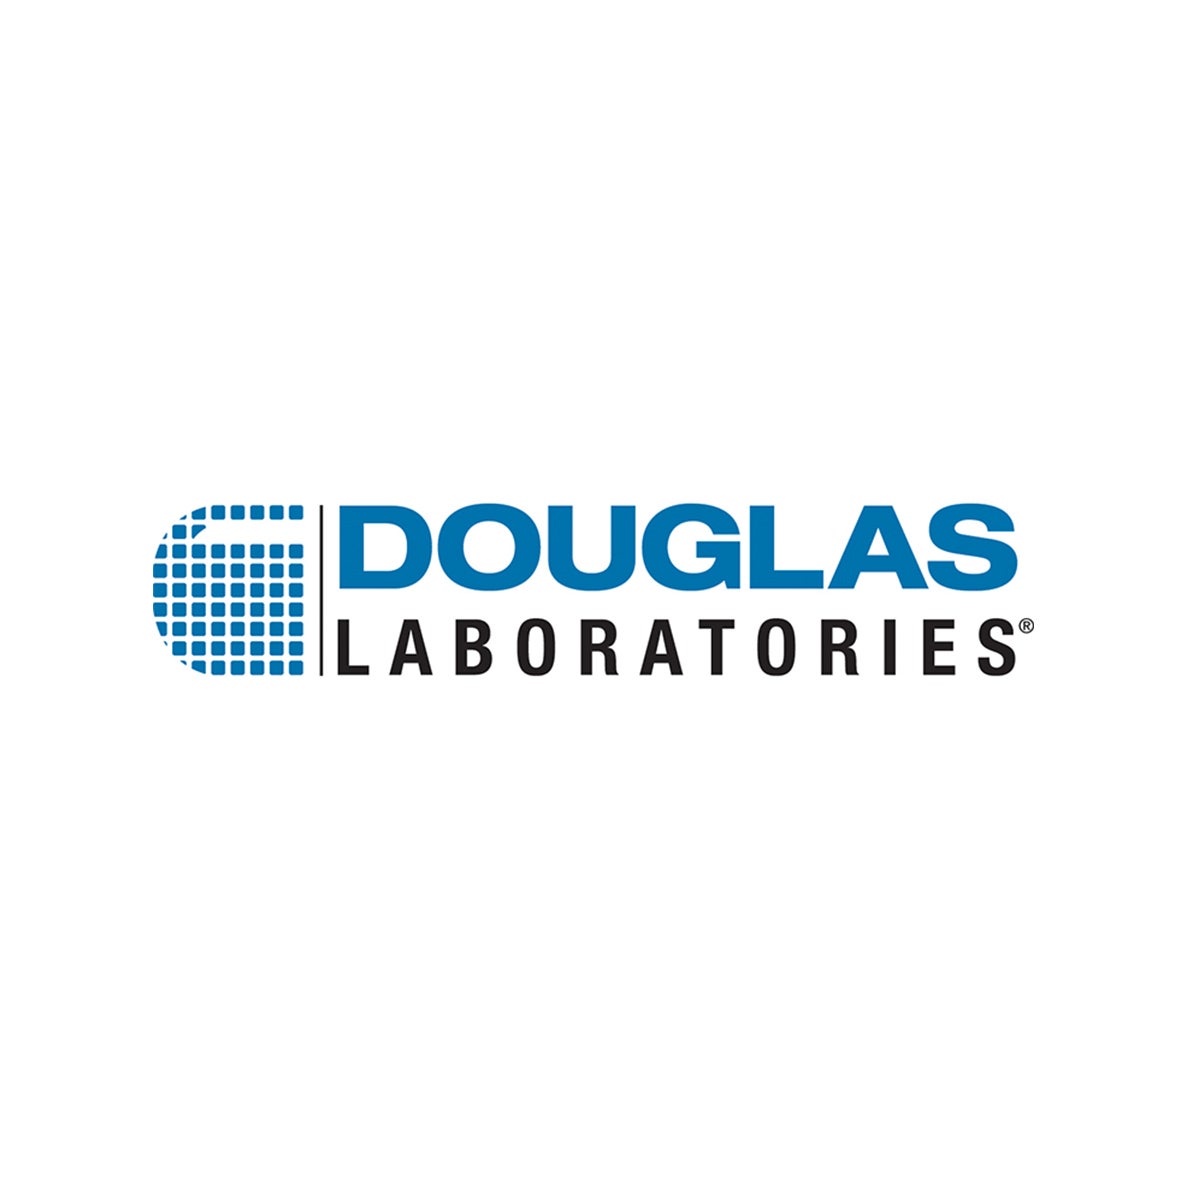 NHSc_Logos_douglas-labs-supplements